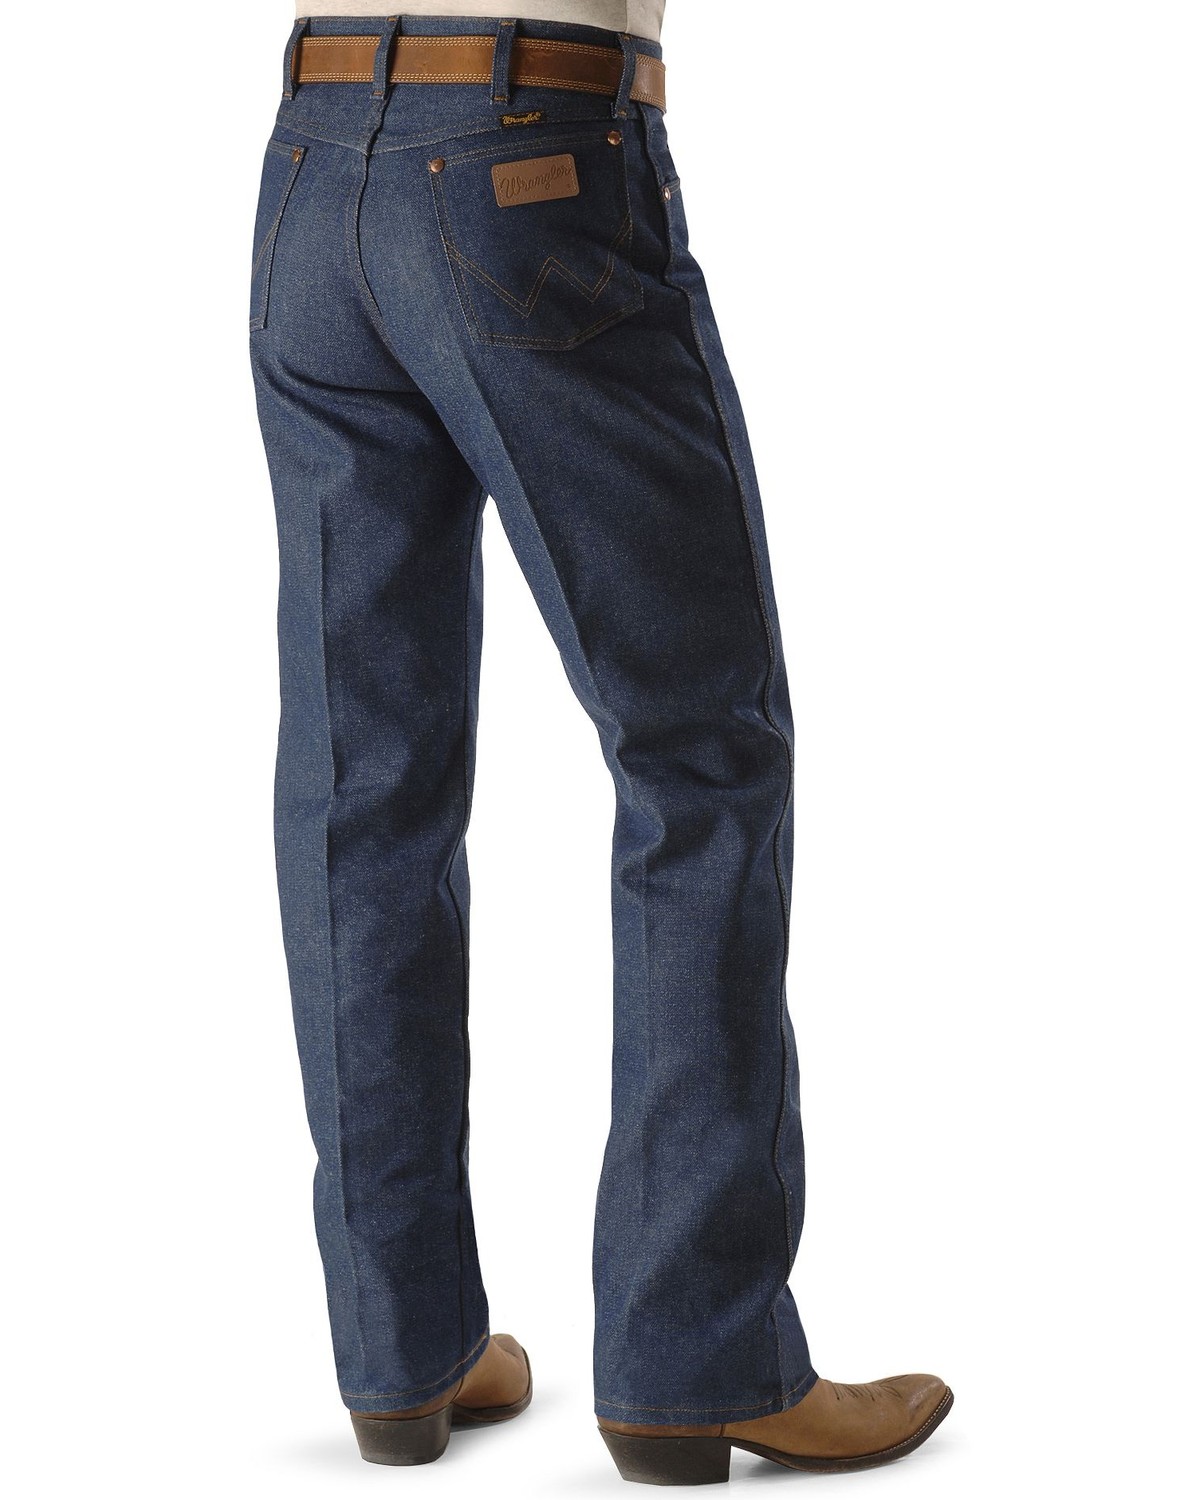 wrangler jeans 44 x 34